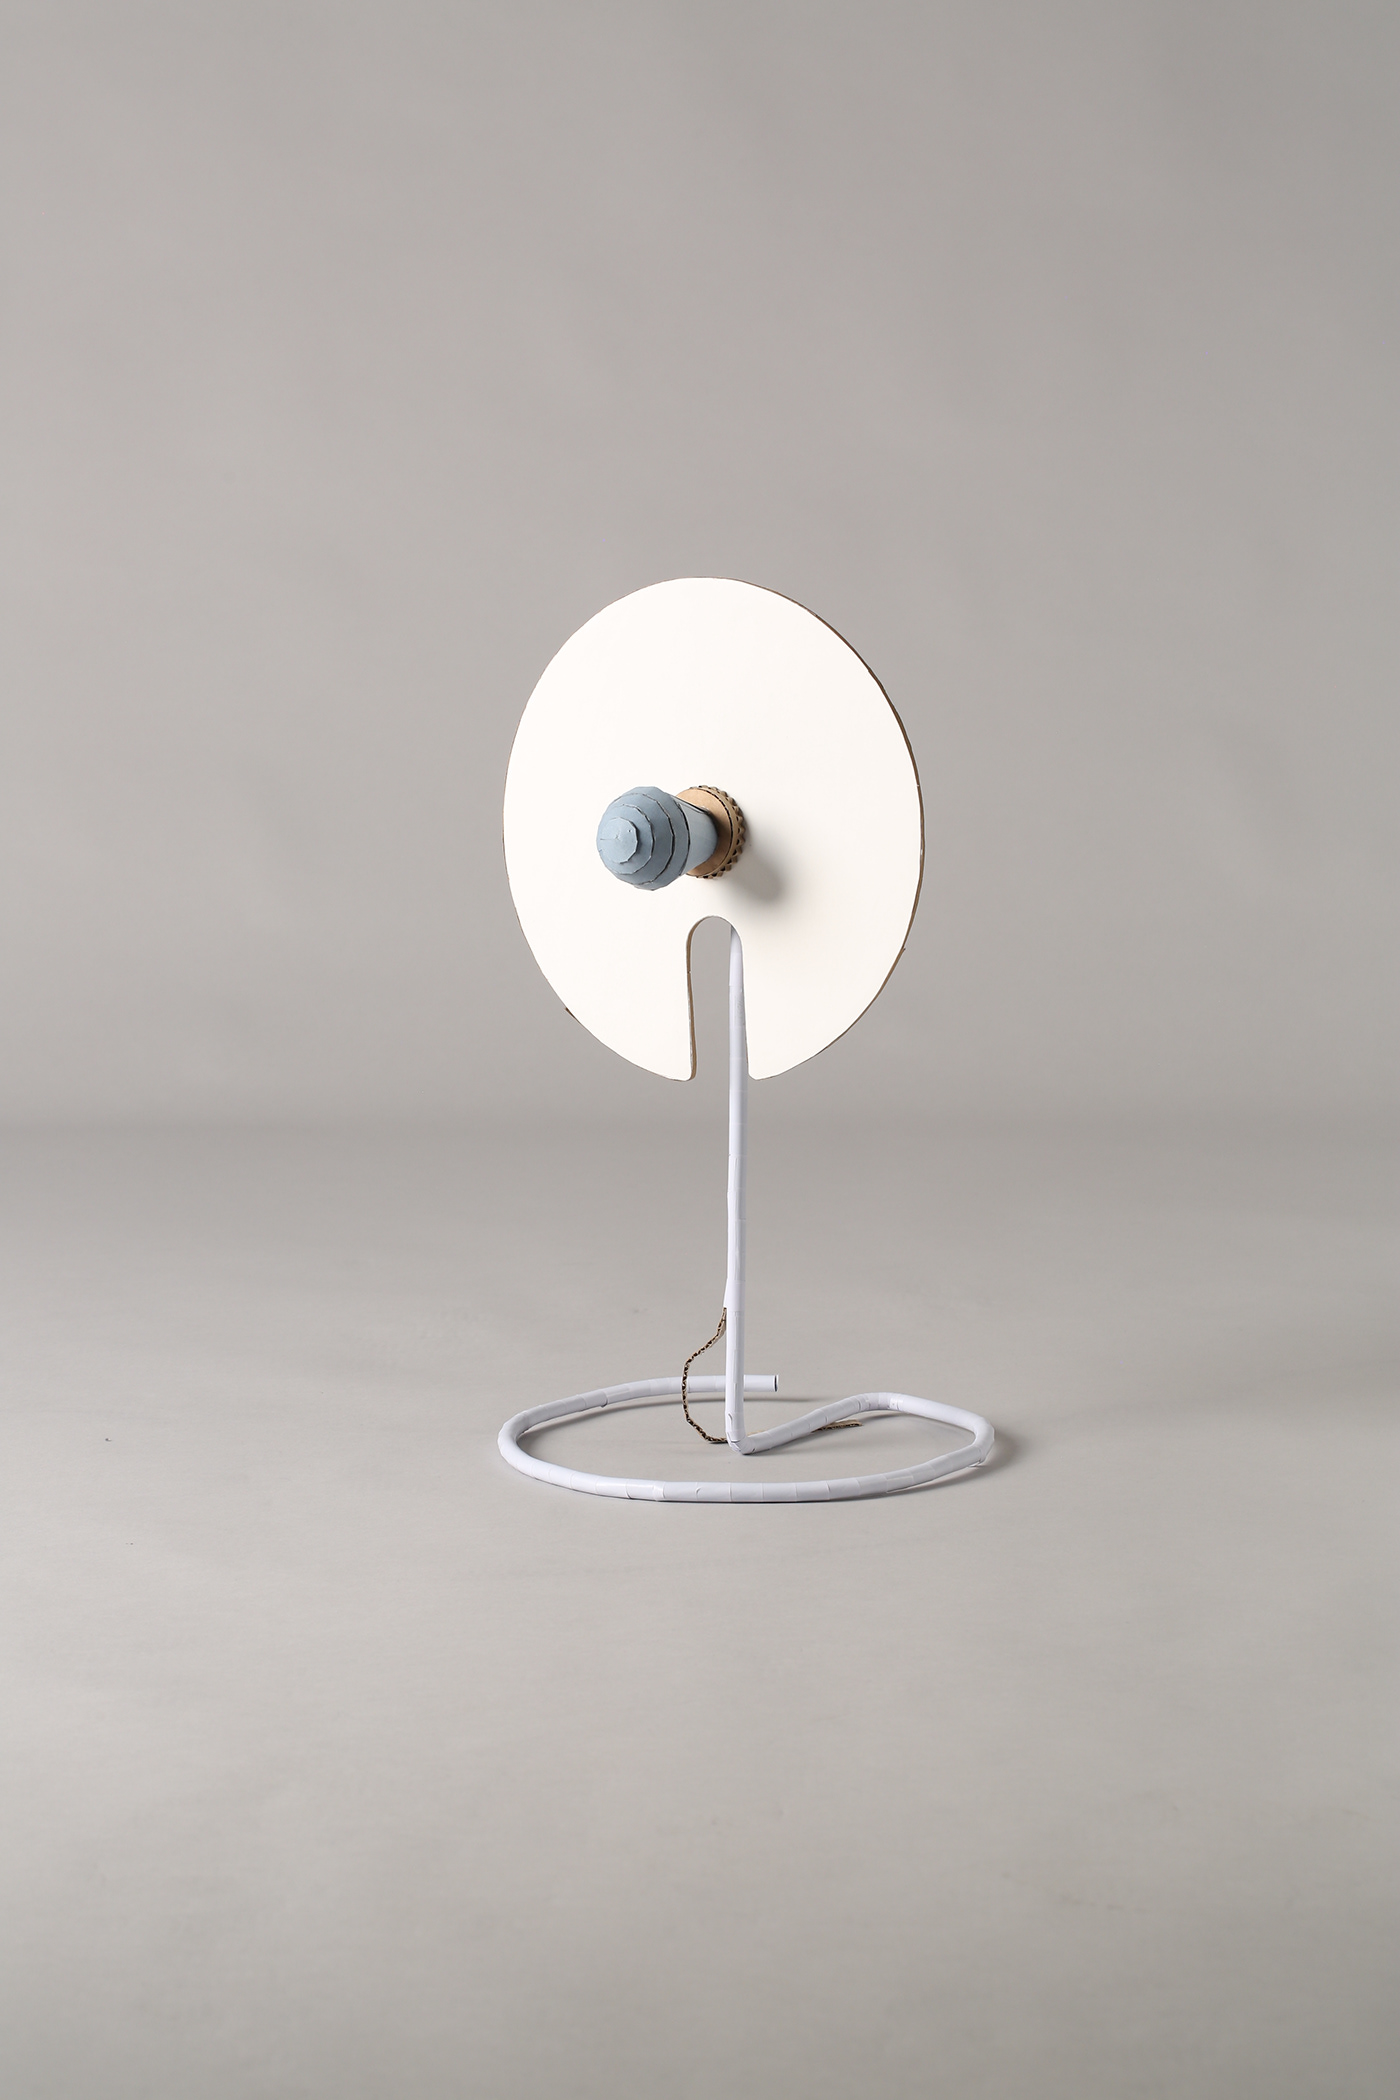 cardboard Lamp prototype